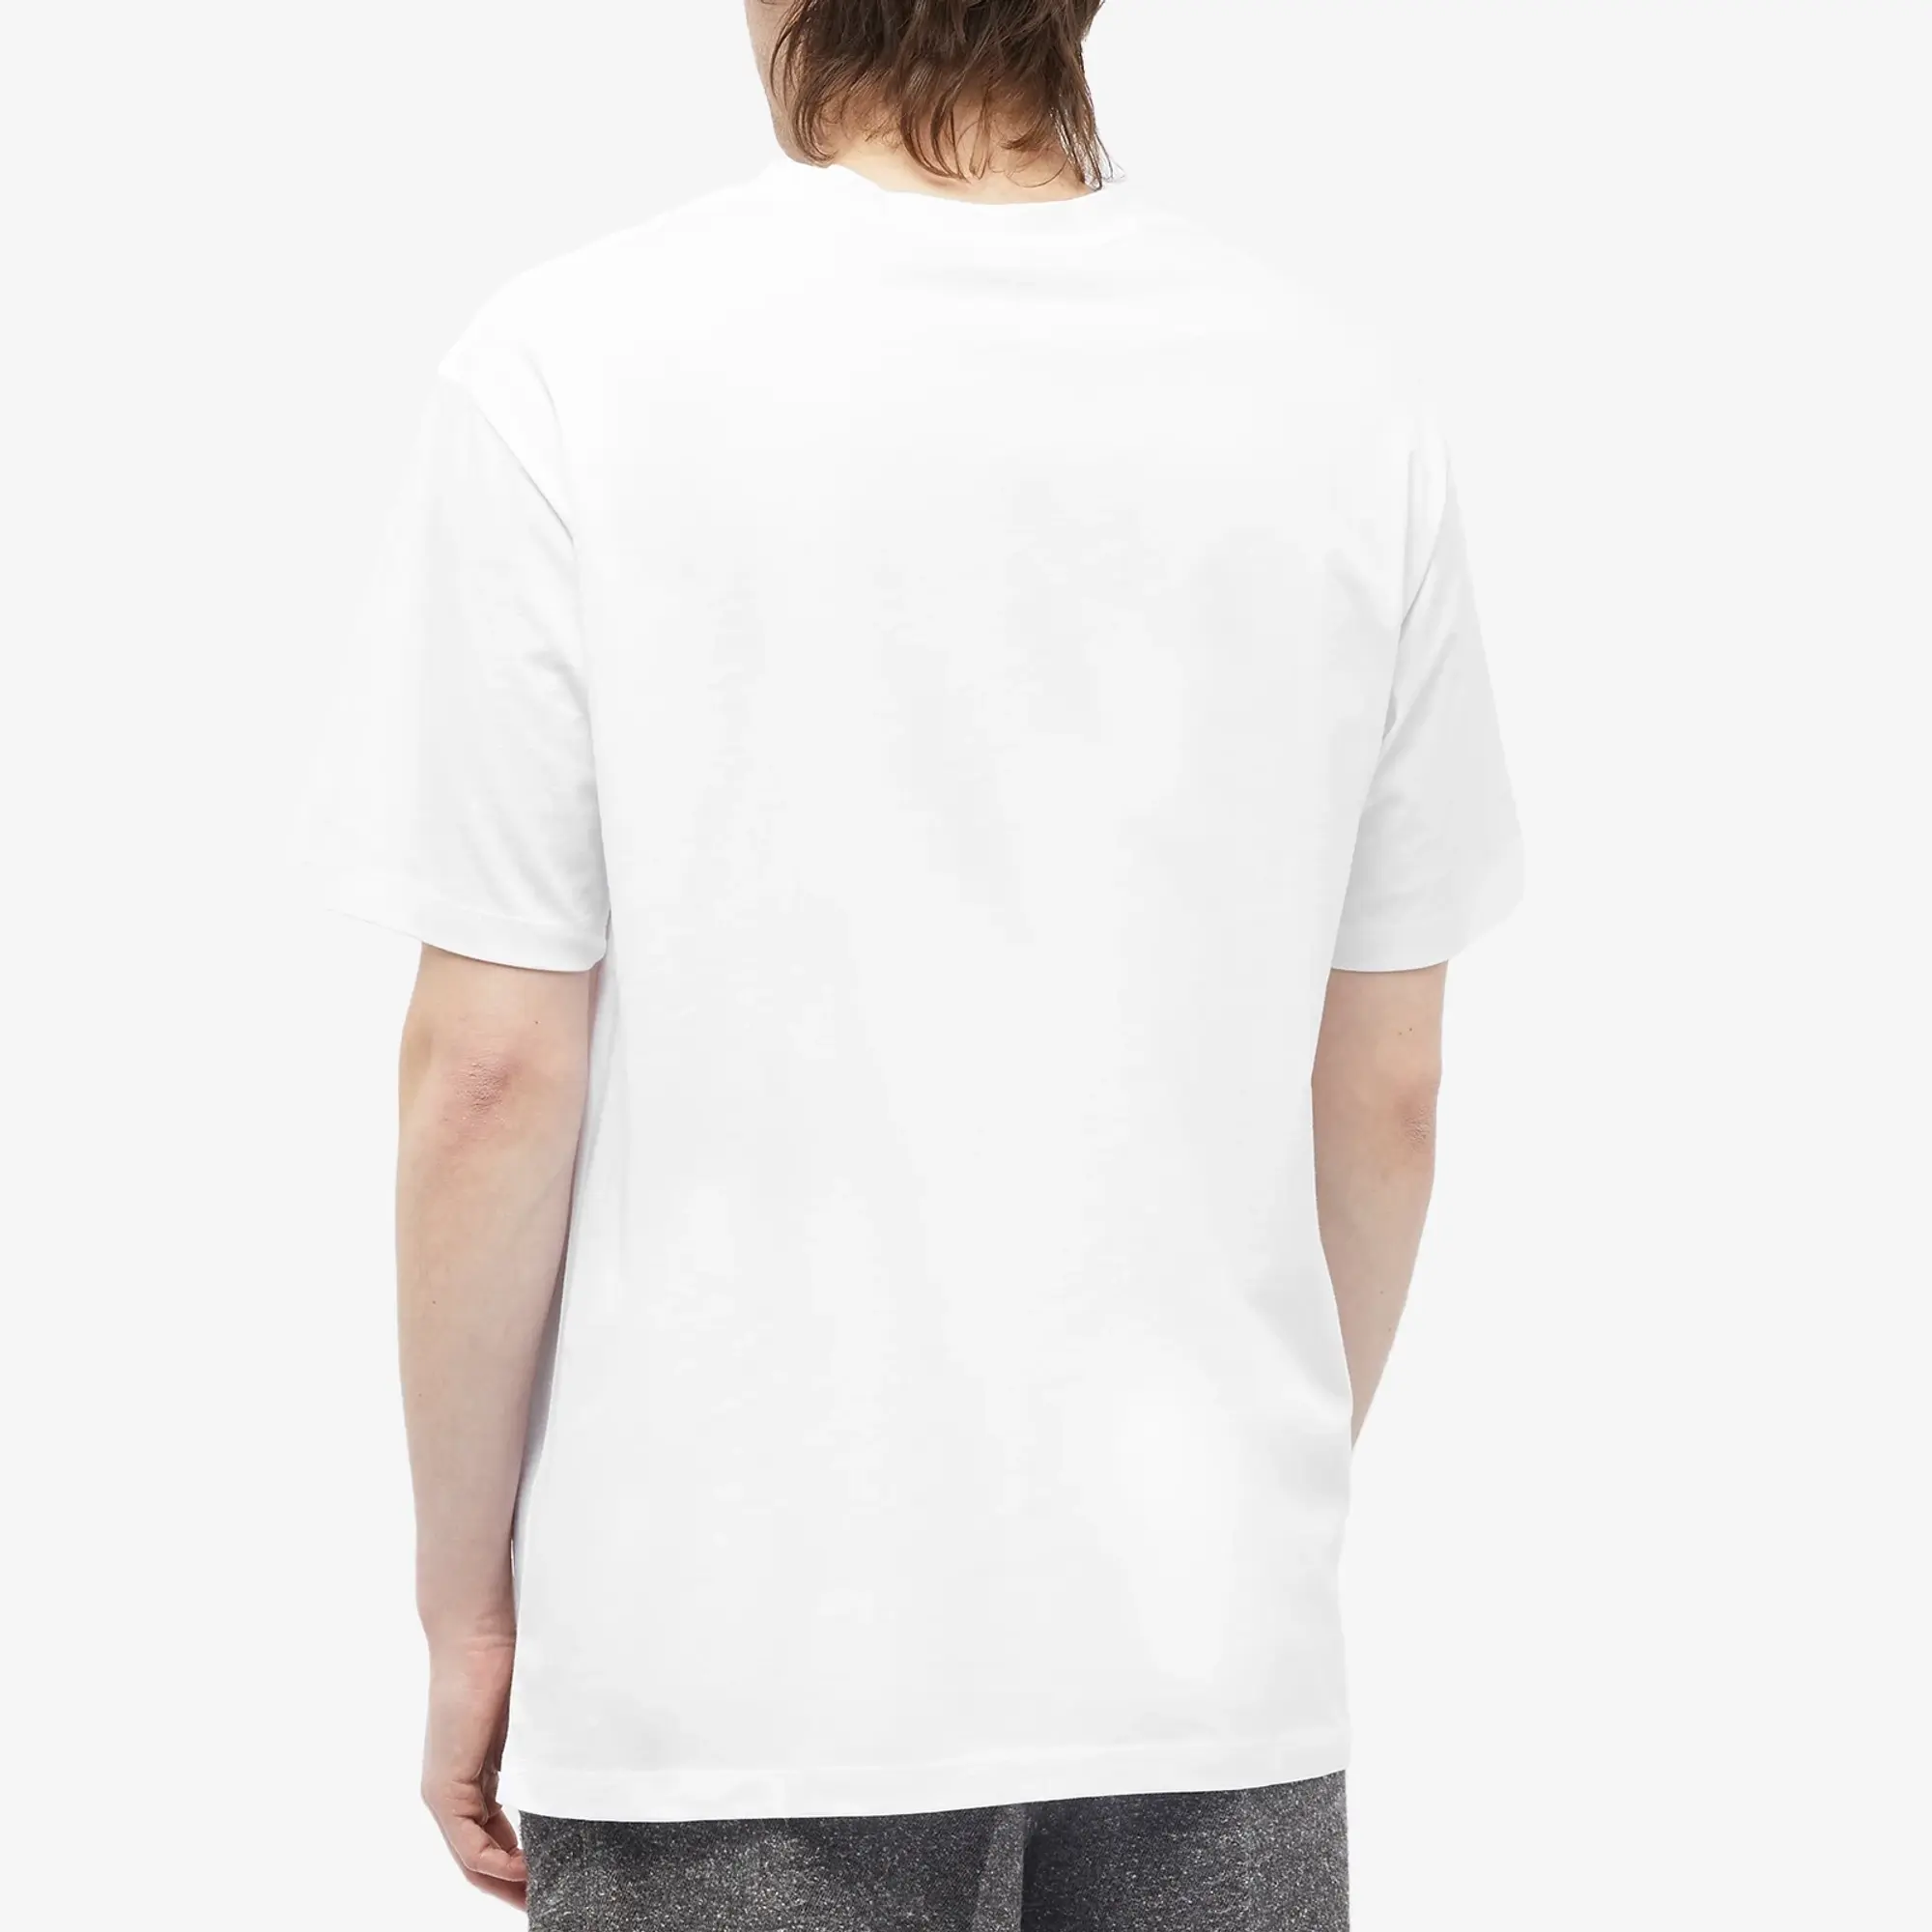 Balmain Men's Paris Logo T-Shirt White/Black